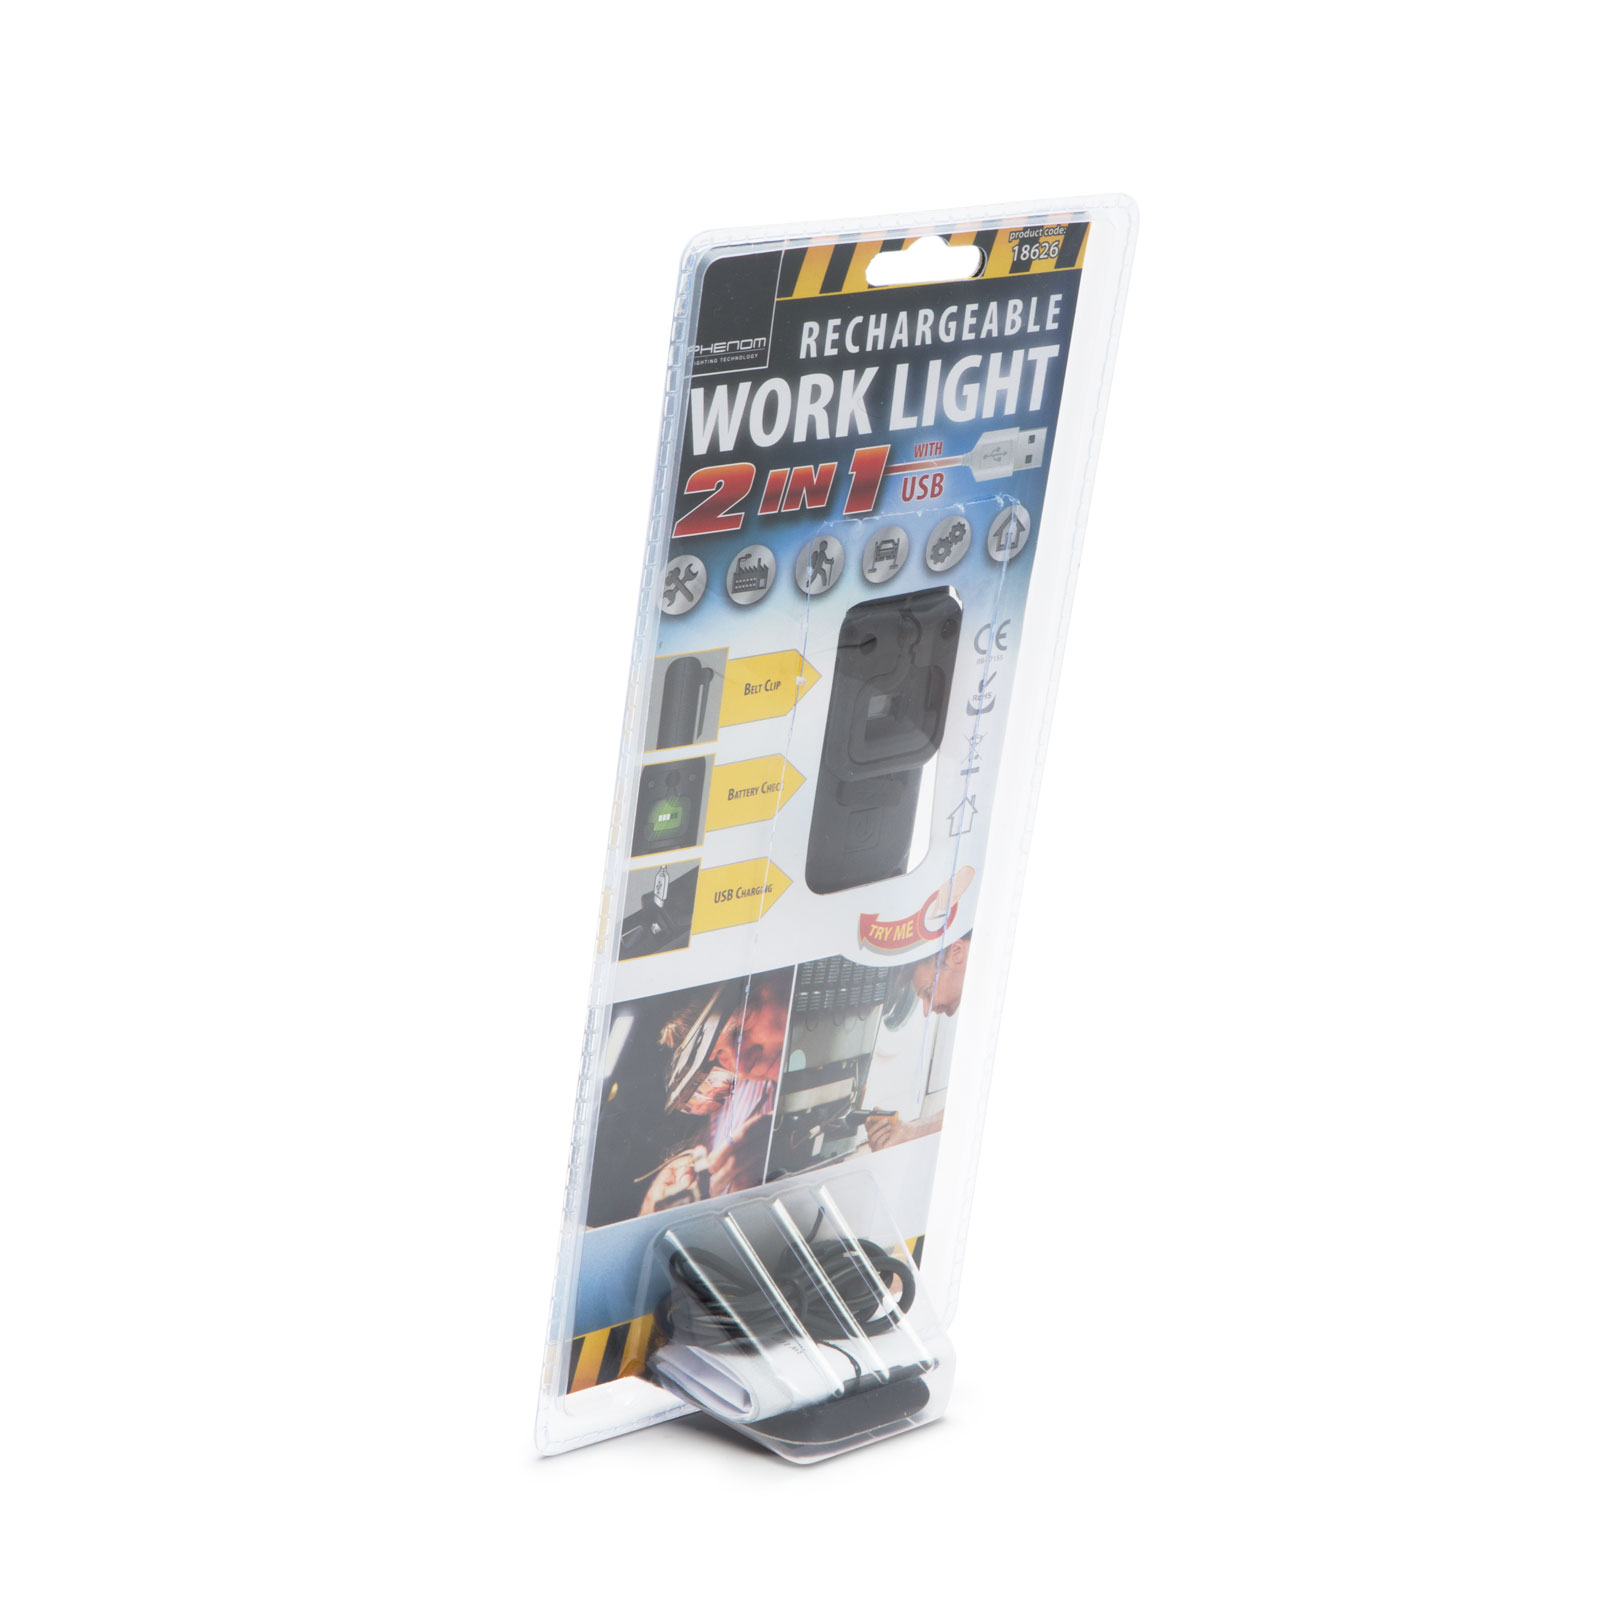 Work Light with COB LED thumb